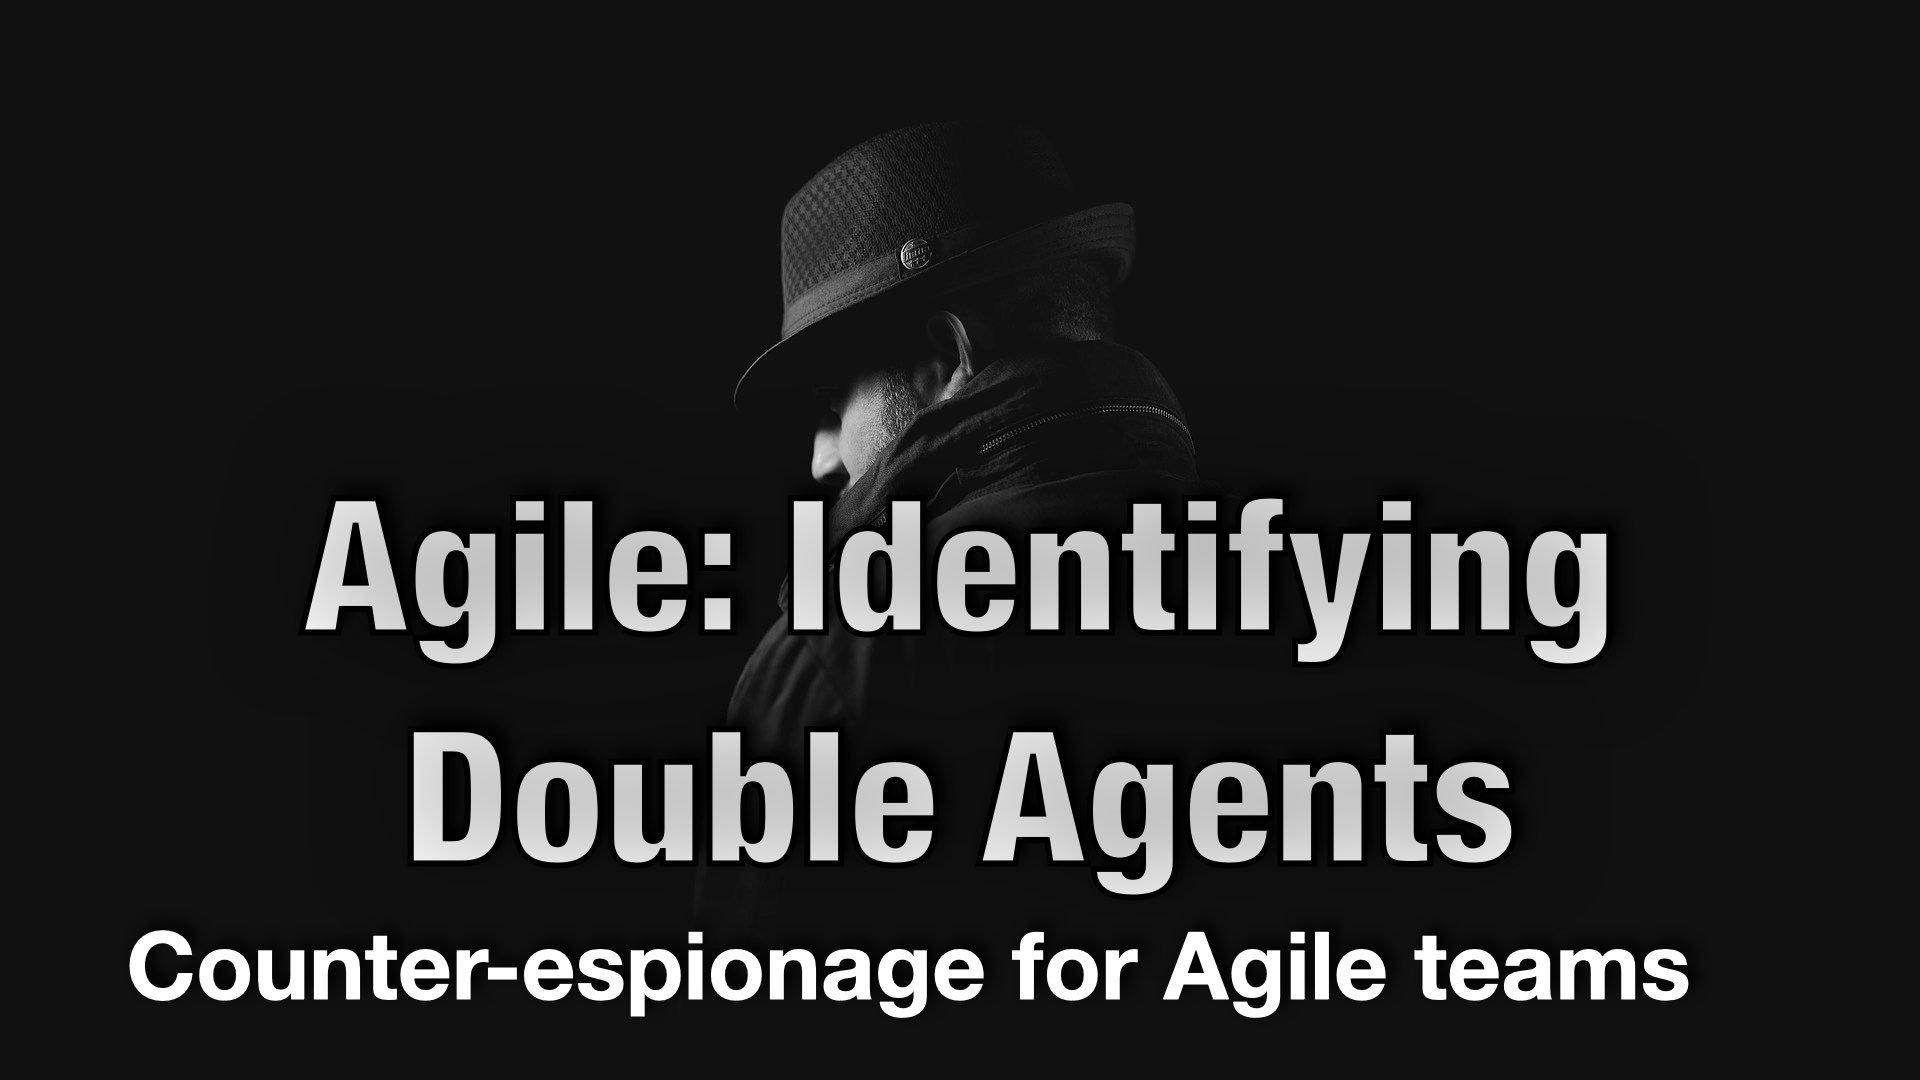 Agile: Identifying Double Agents